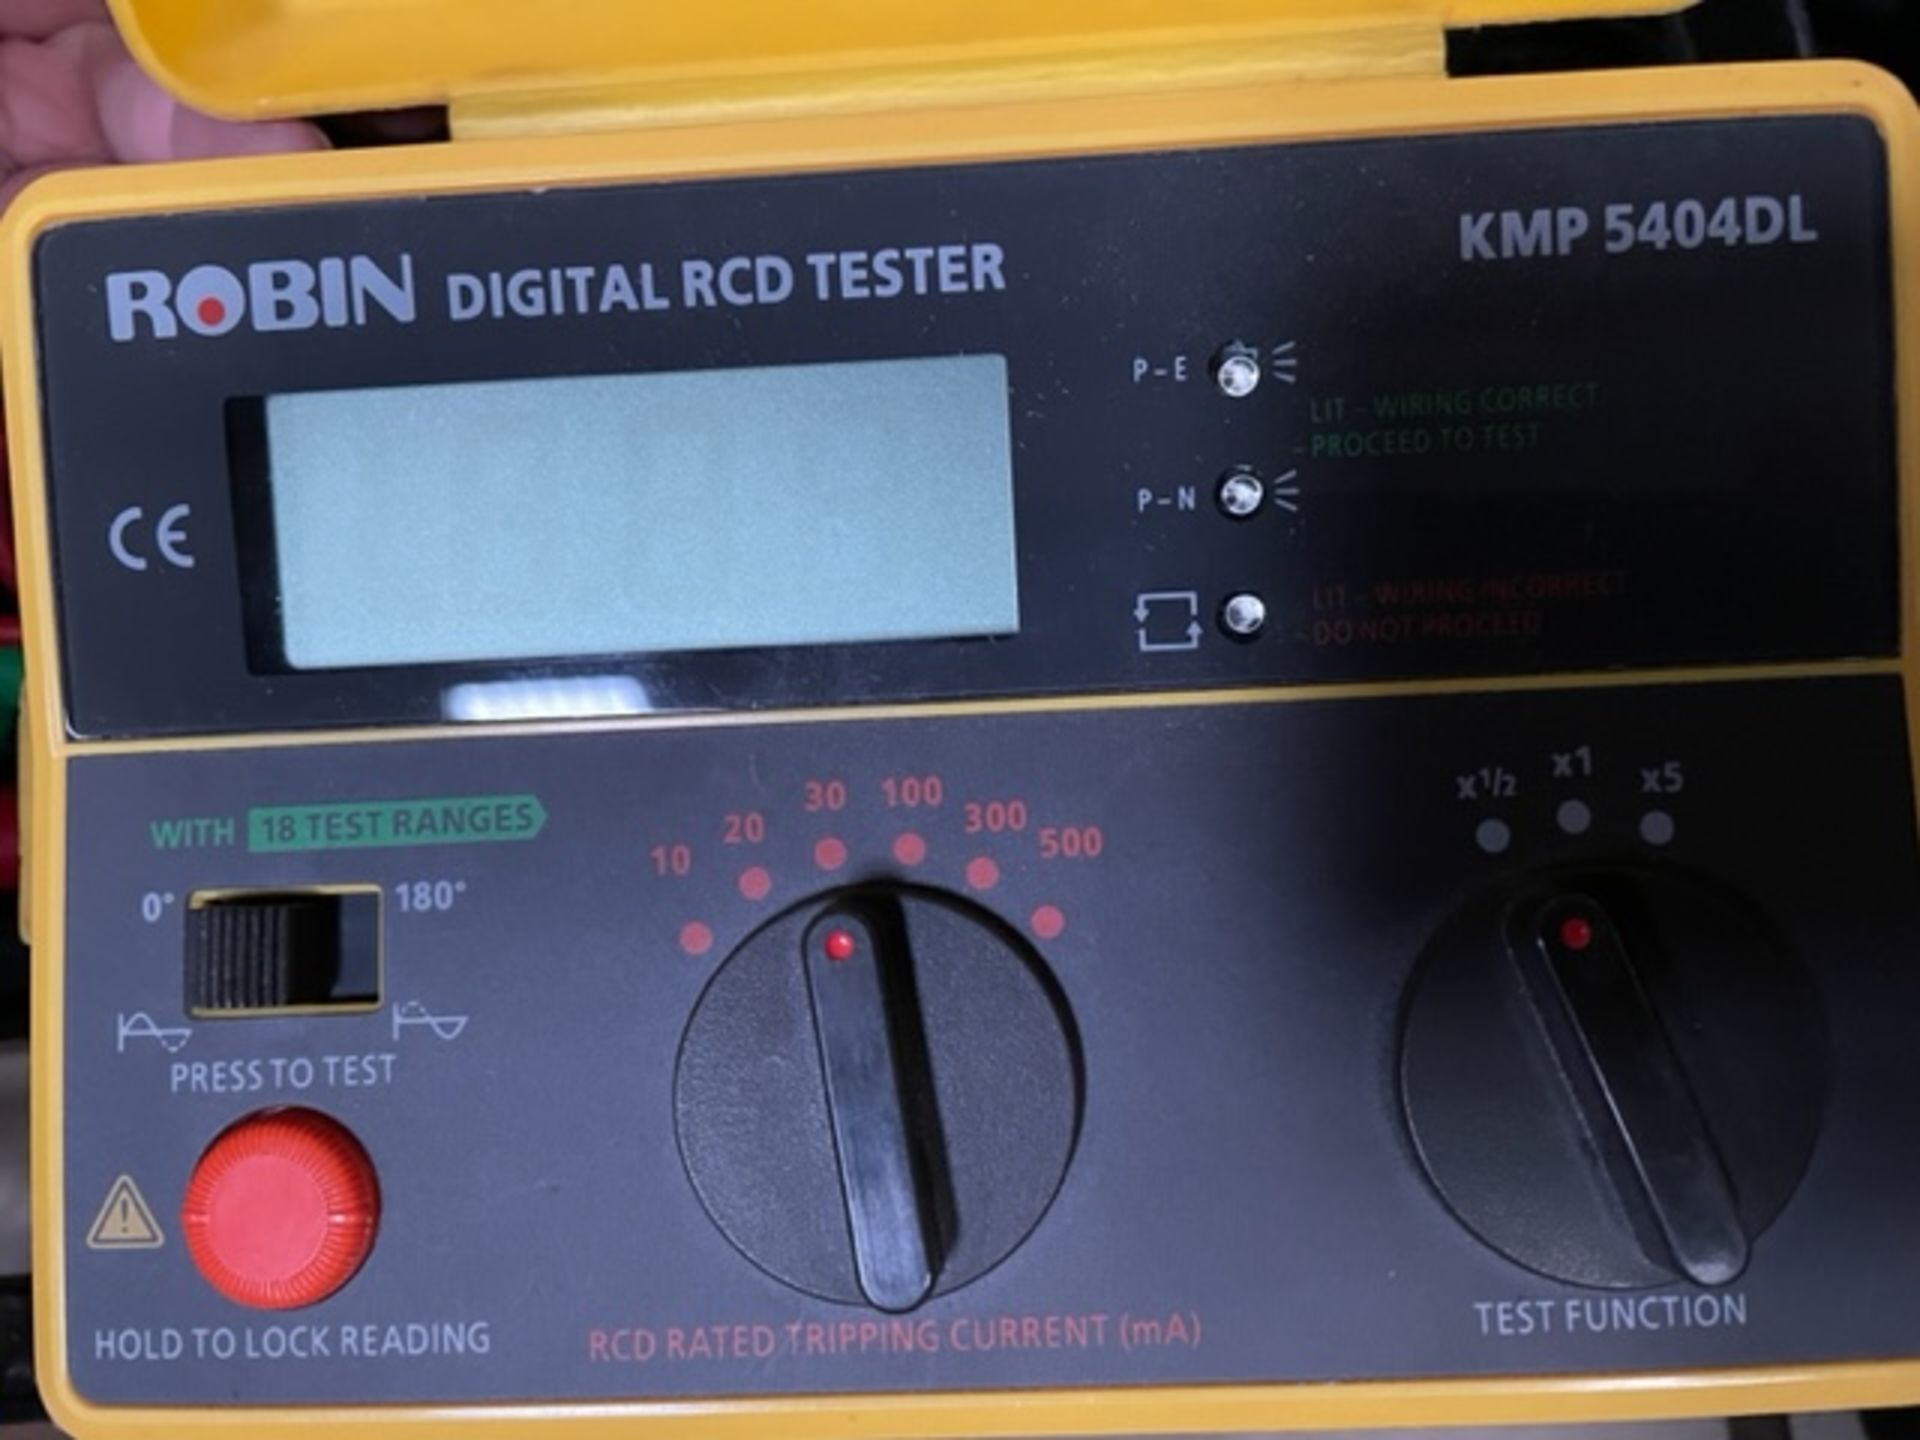 Robin Electrical Test Set Comprising: K3131DL Insulation Continuity Tester, KMP5404DL RCD Tester & a - Image 3 of 4